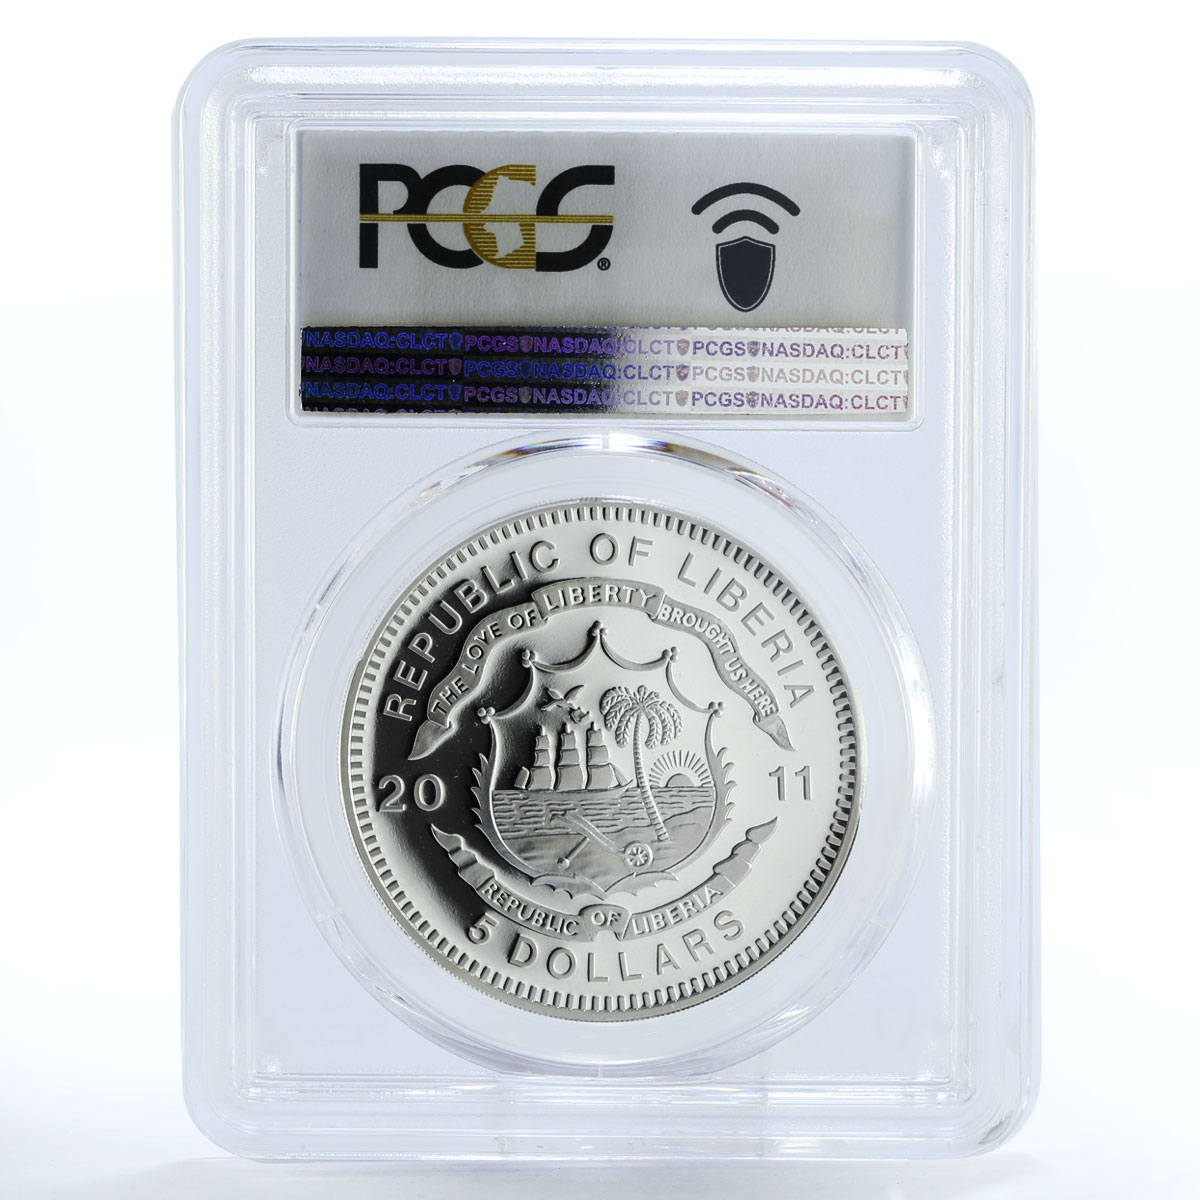 Liberia 5 dollars PKP Fablok OL 49 Train Railroad PR69 PCGS silver coin 2011